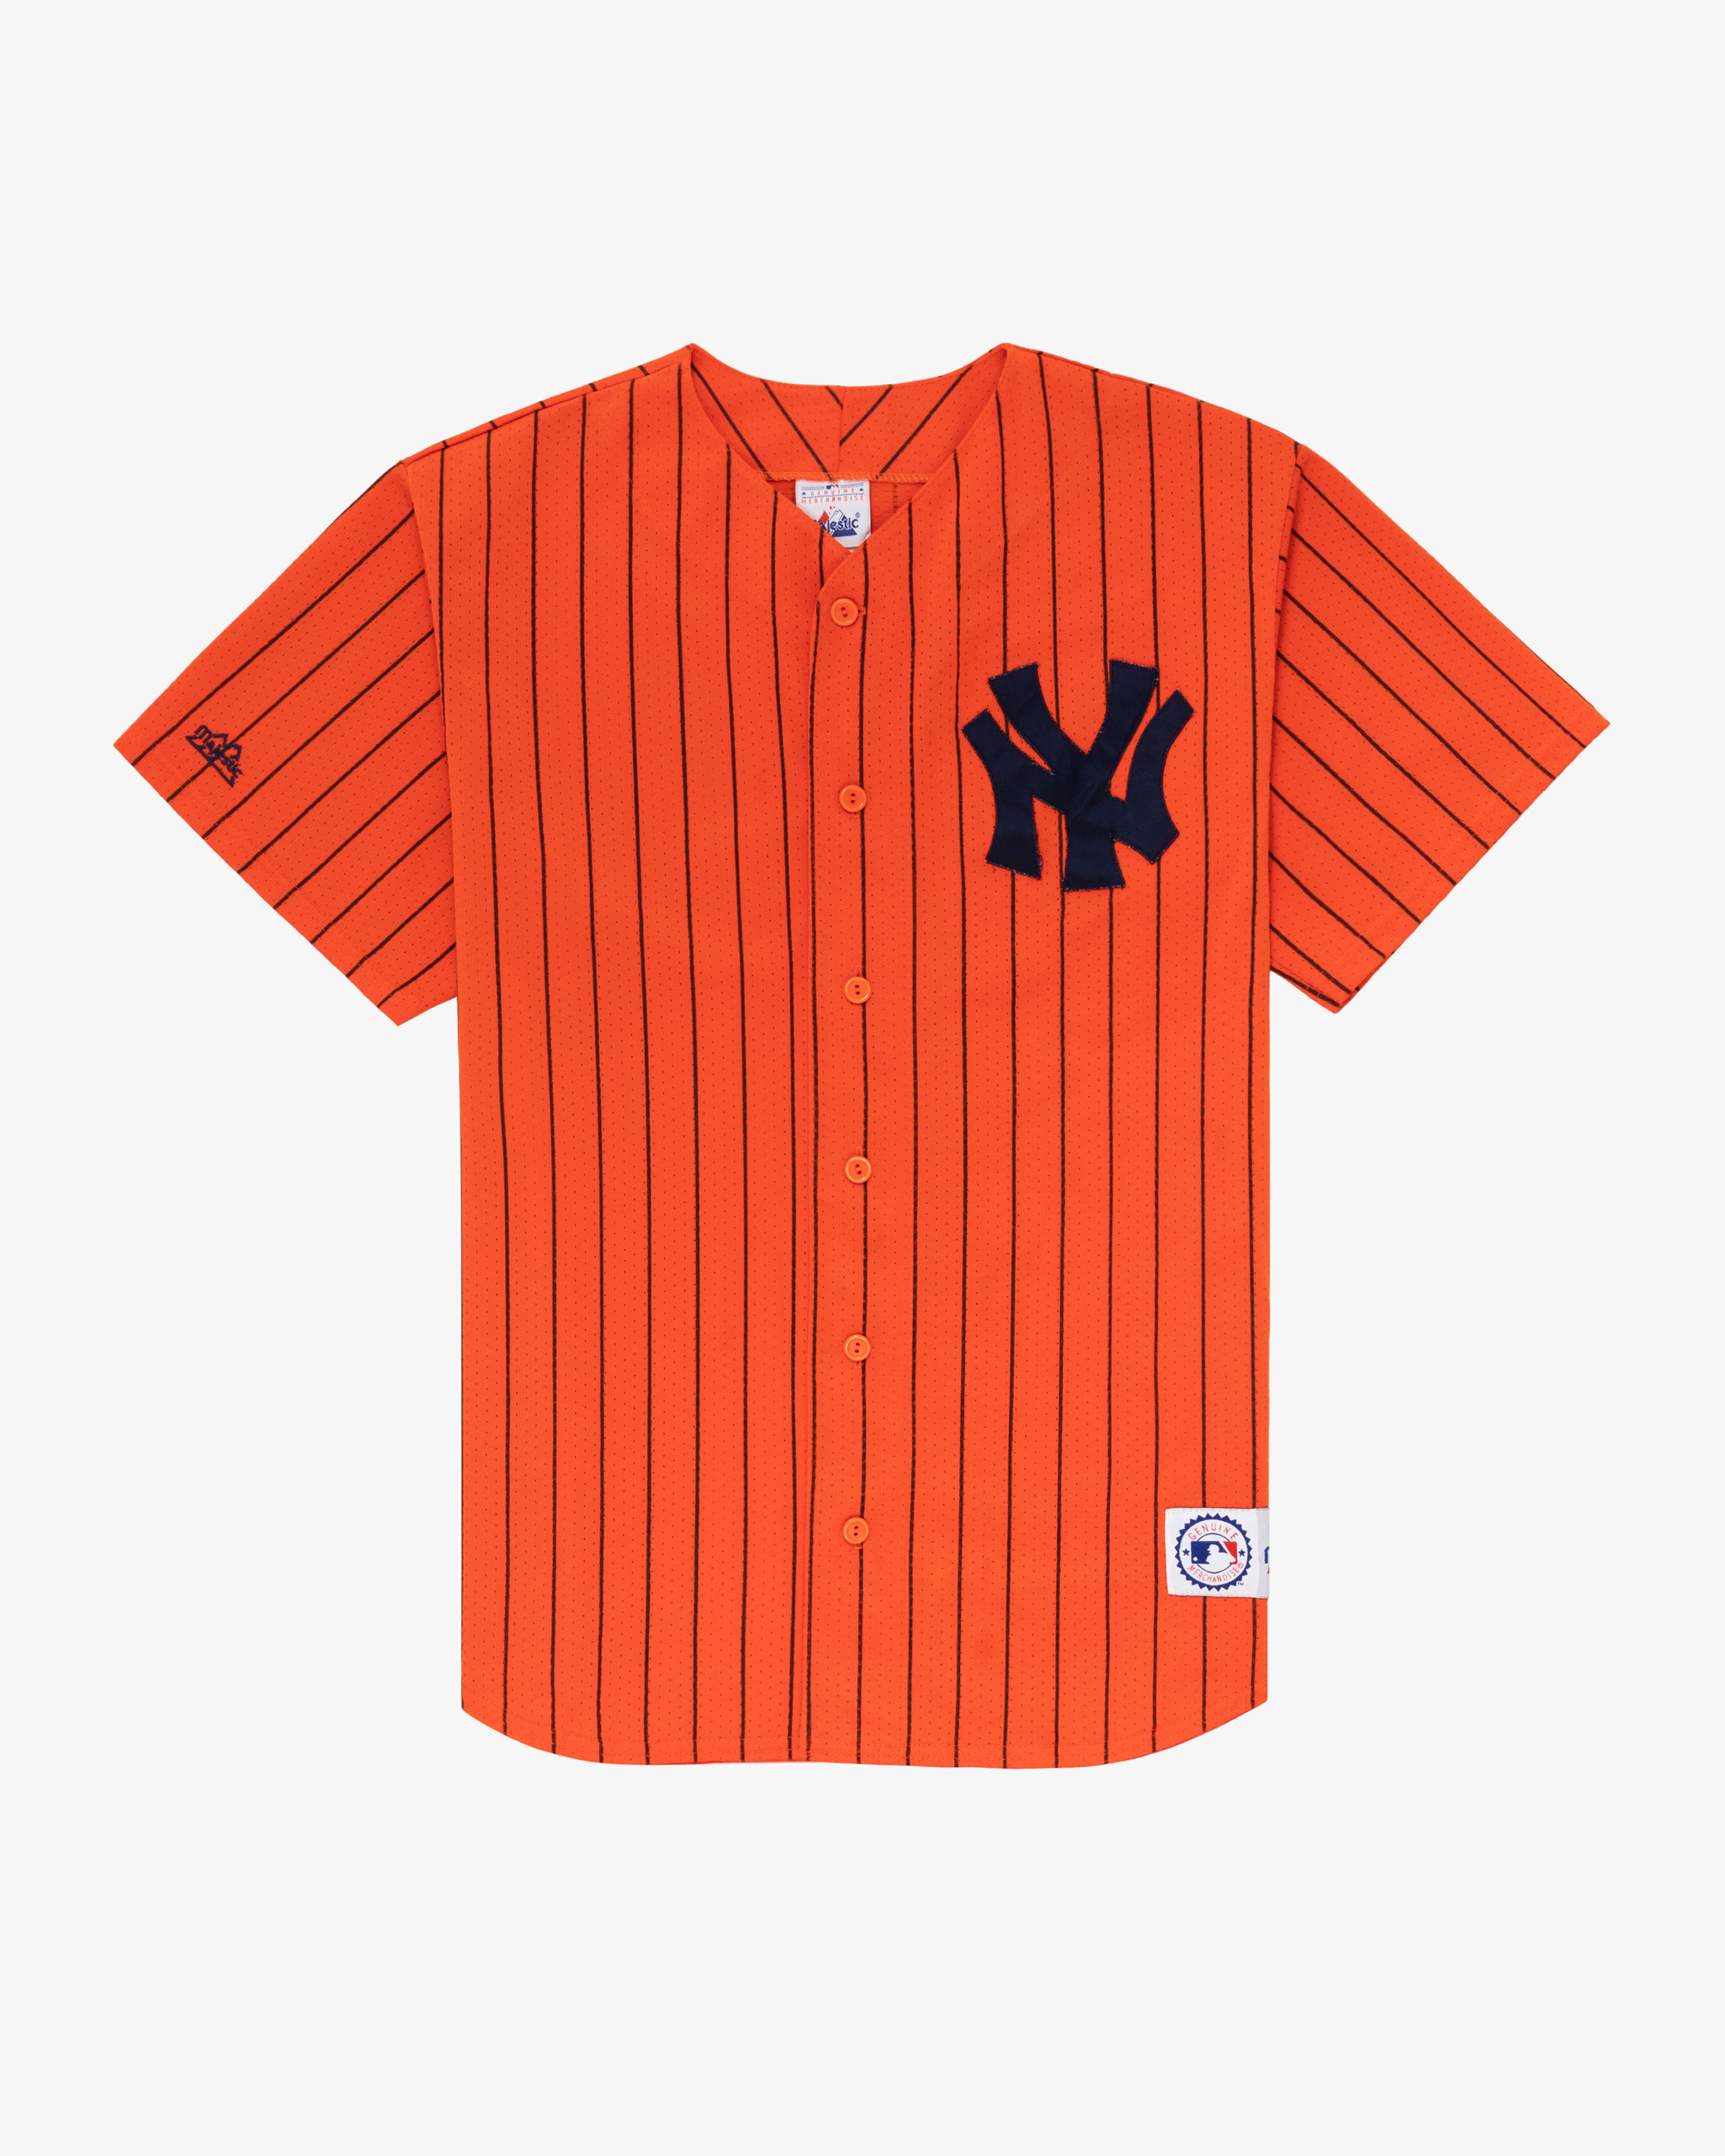 MLB New York Yankees Robinson Cano Home Replica Baseball Jersey  WhiteNavy Medium  Amazonin Clothing  Accessories